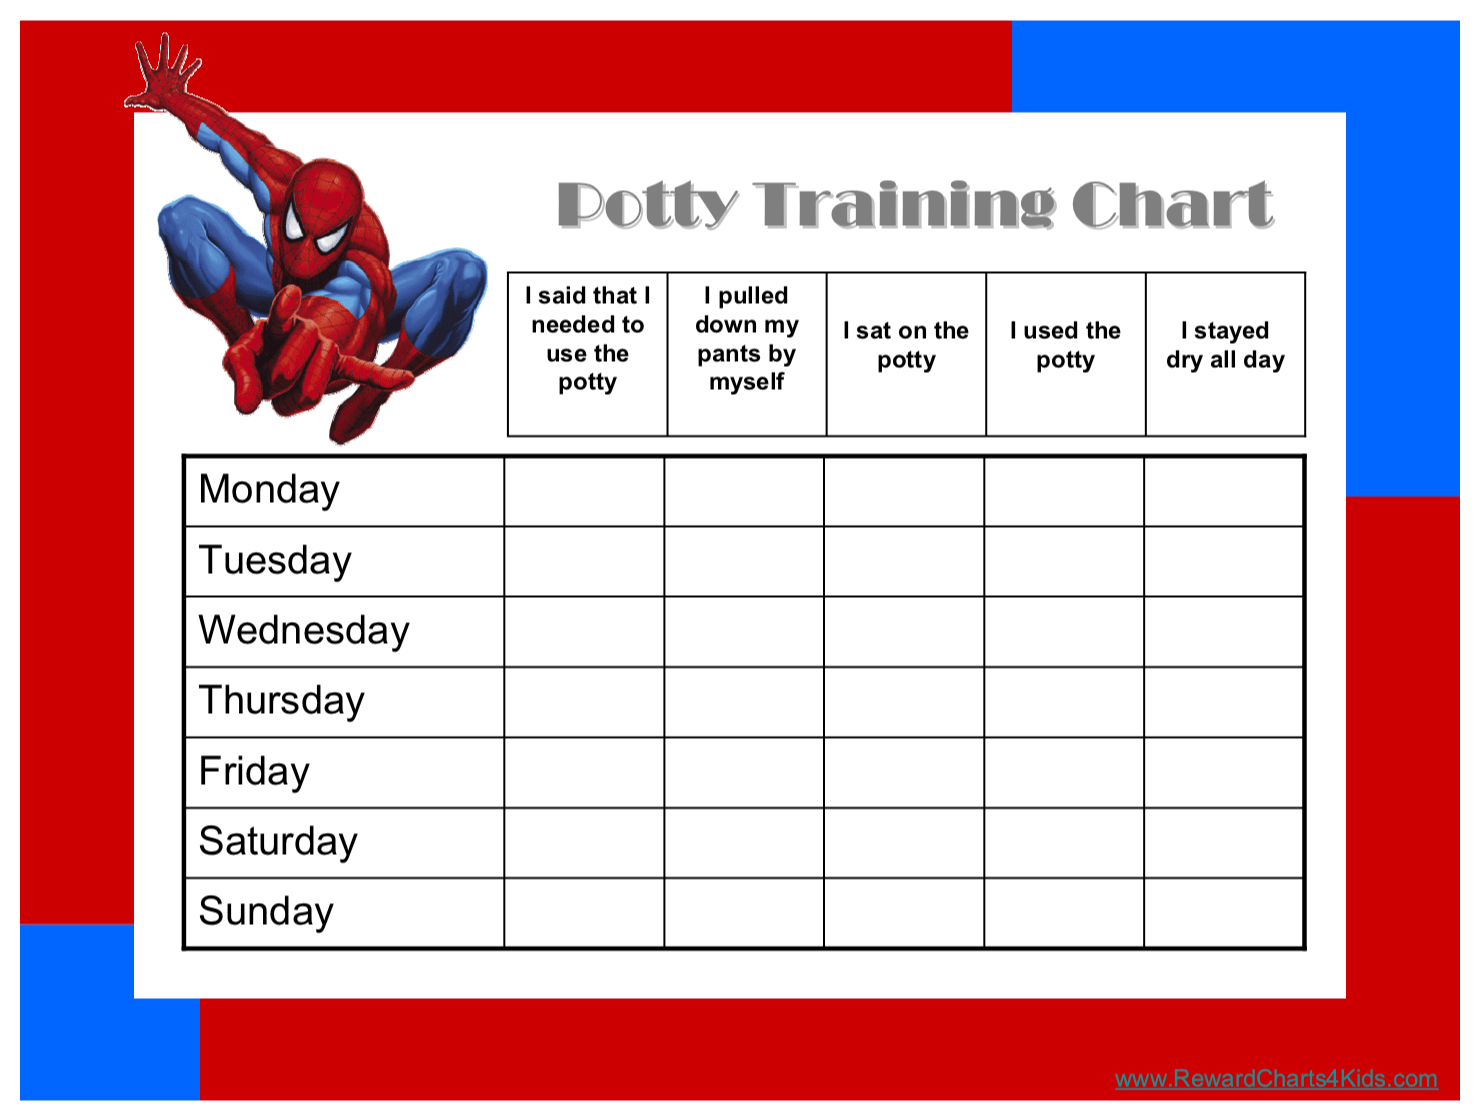 Free Printable Potty Training Charts - Potty Training - Free Printable Minnie Mouse Potty Training Chart